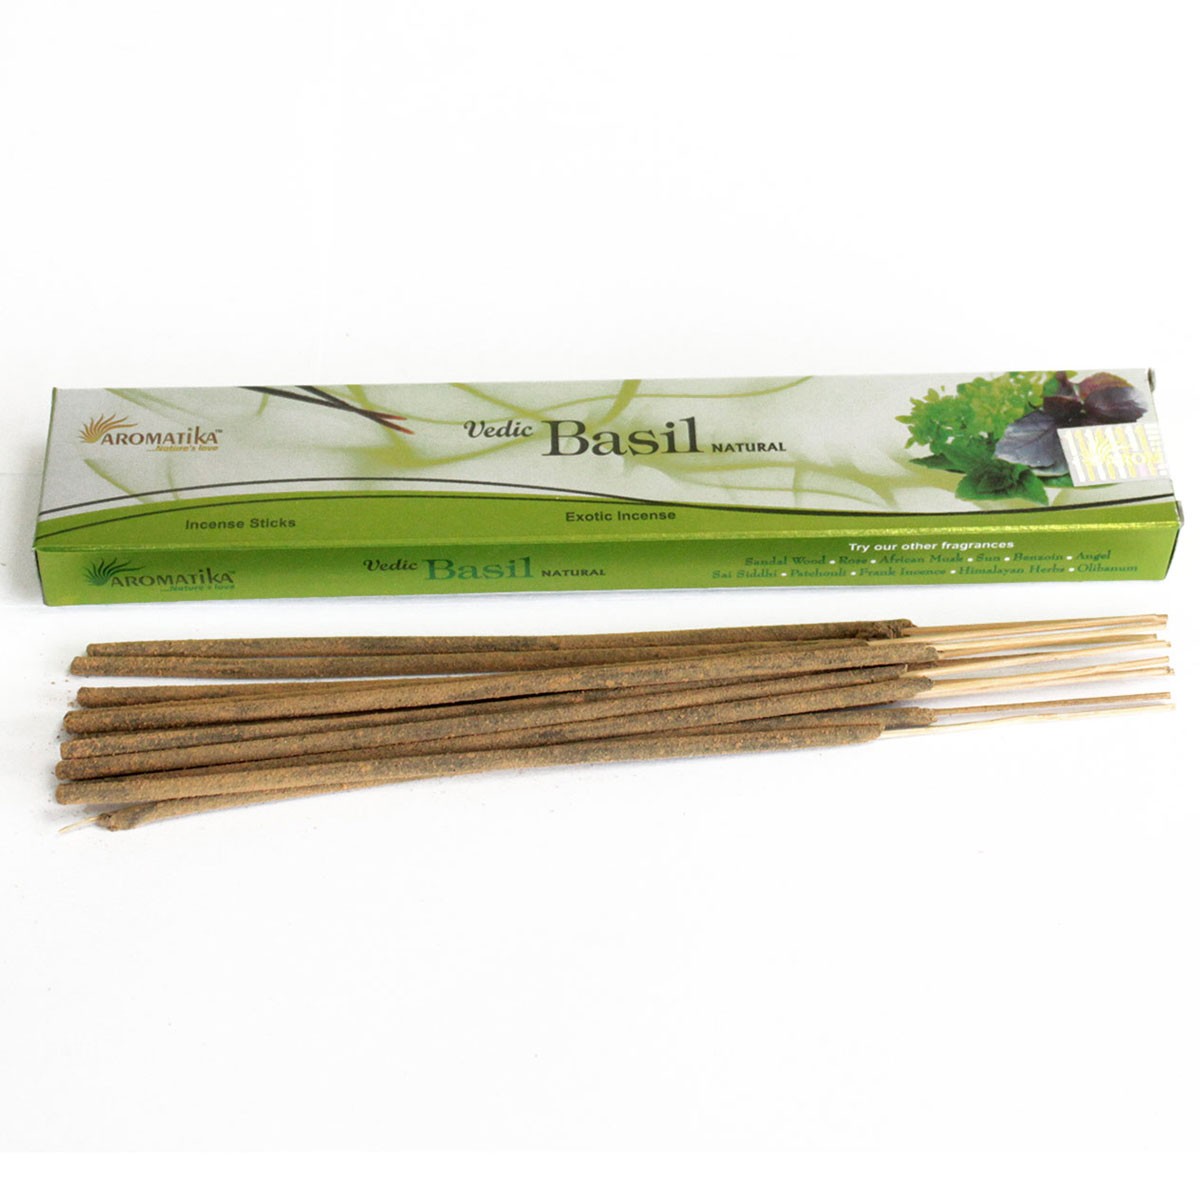 5 x Packs Vedic Incense Sticks - Basil